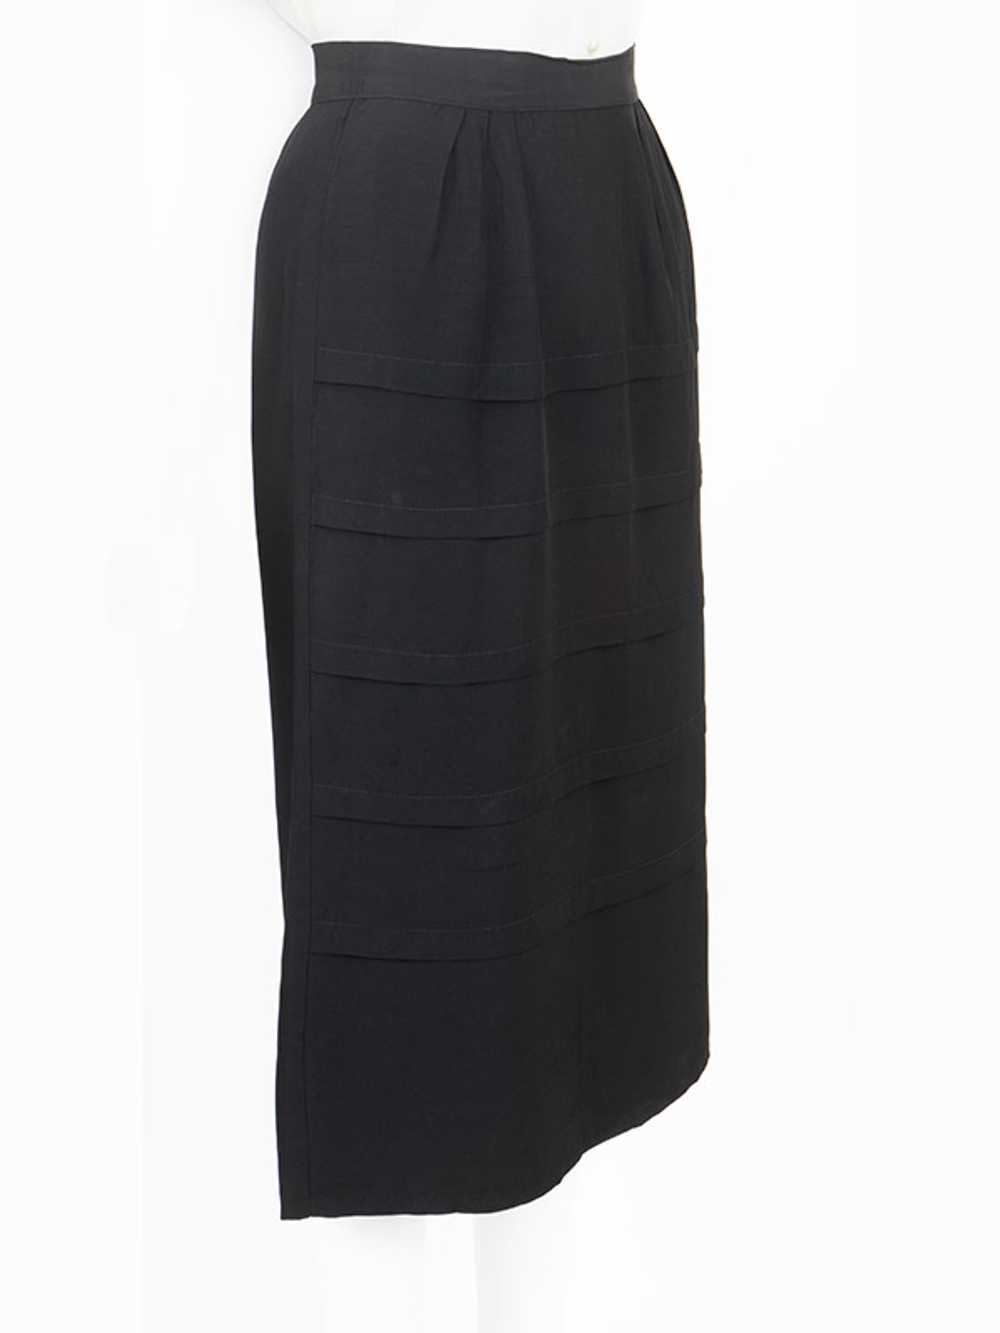 1950s Black Satin Pencil Skirt w/ Tiered Pleats - image 2